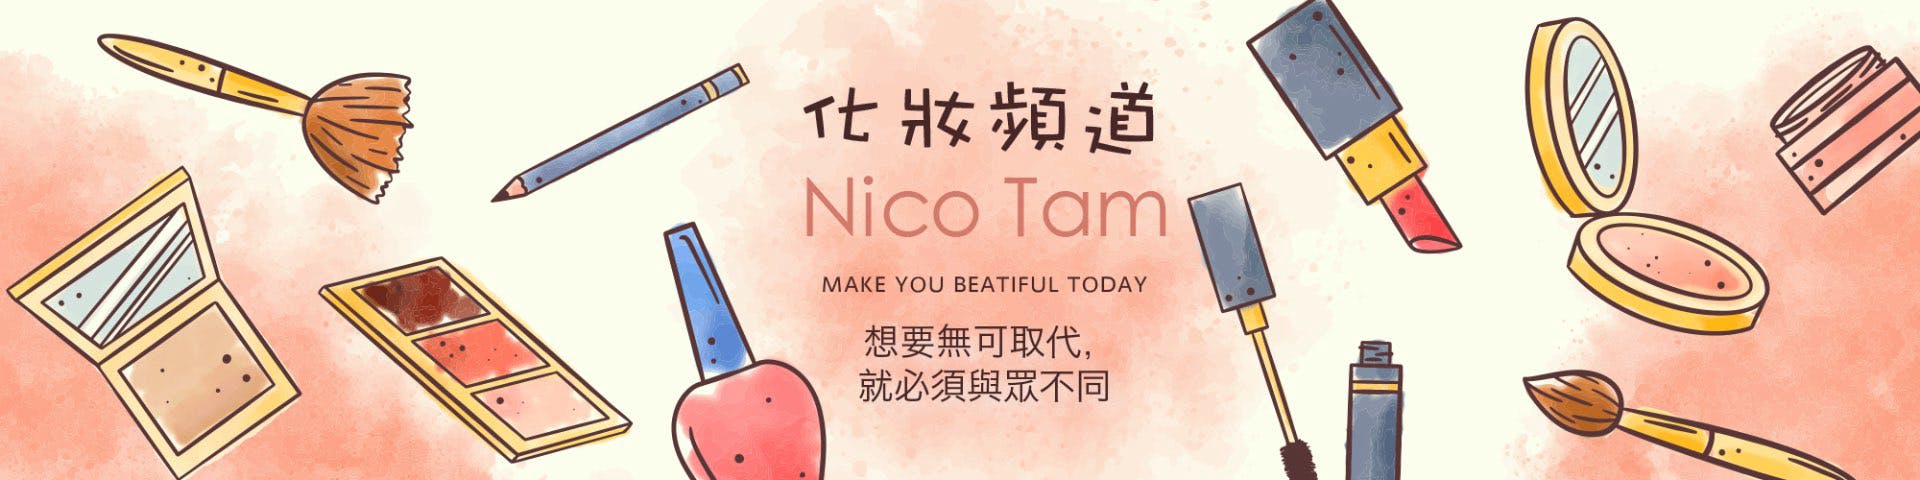 Nico Tam's banner